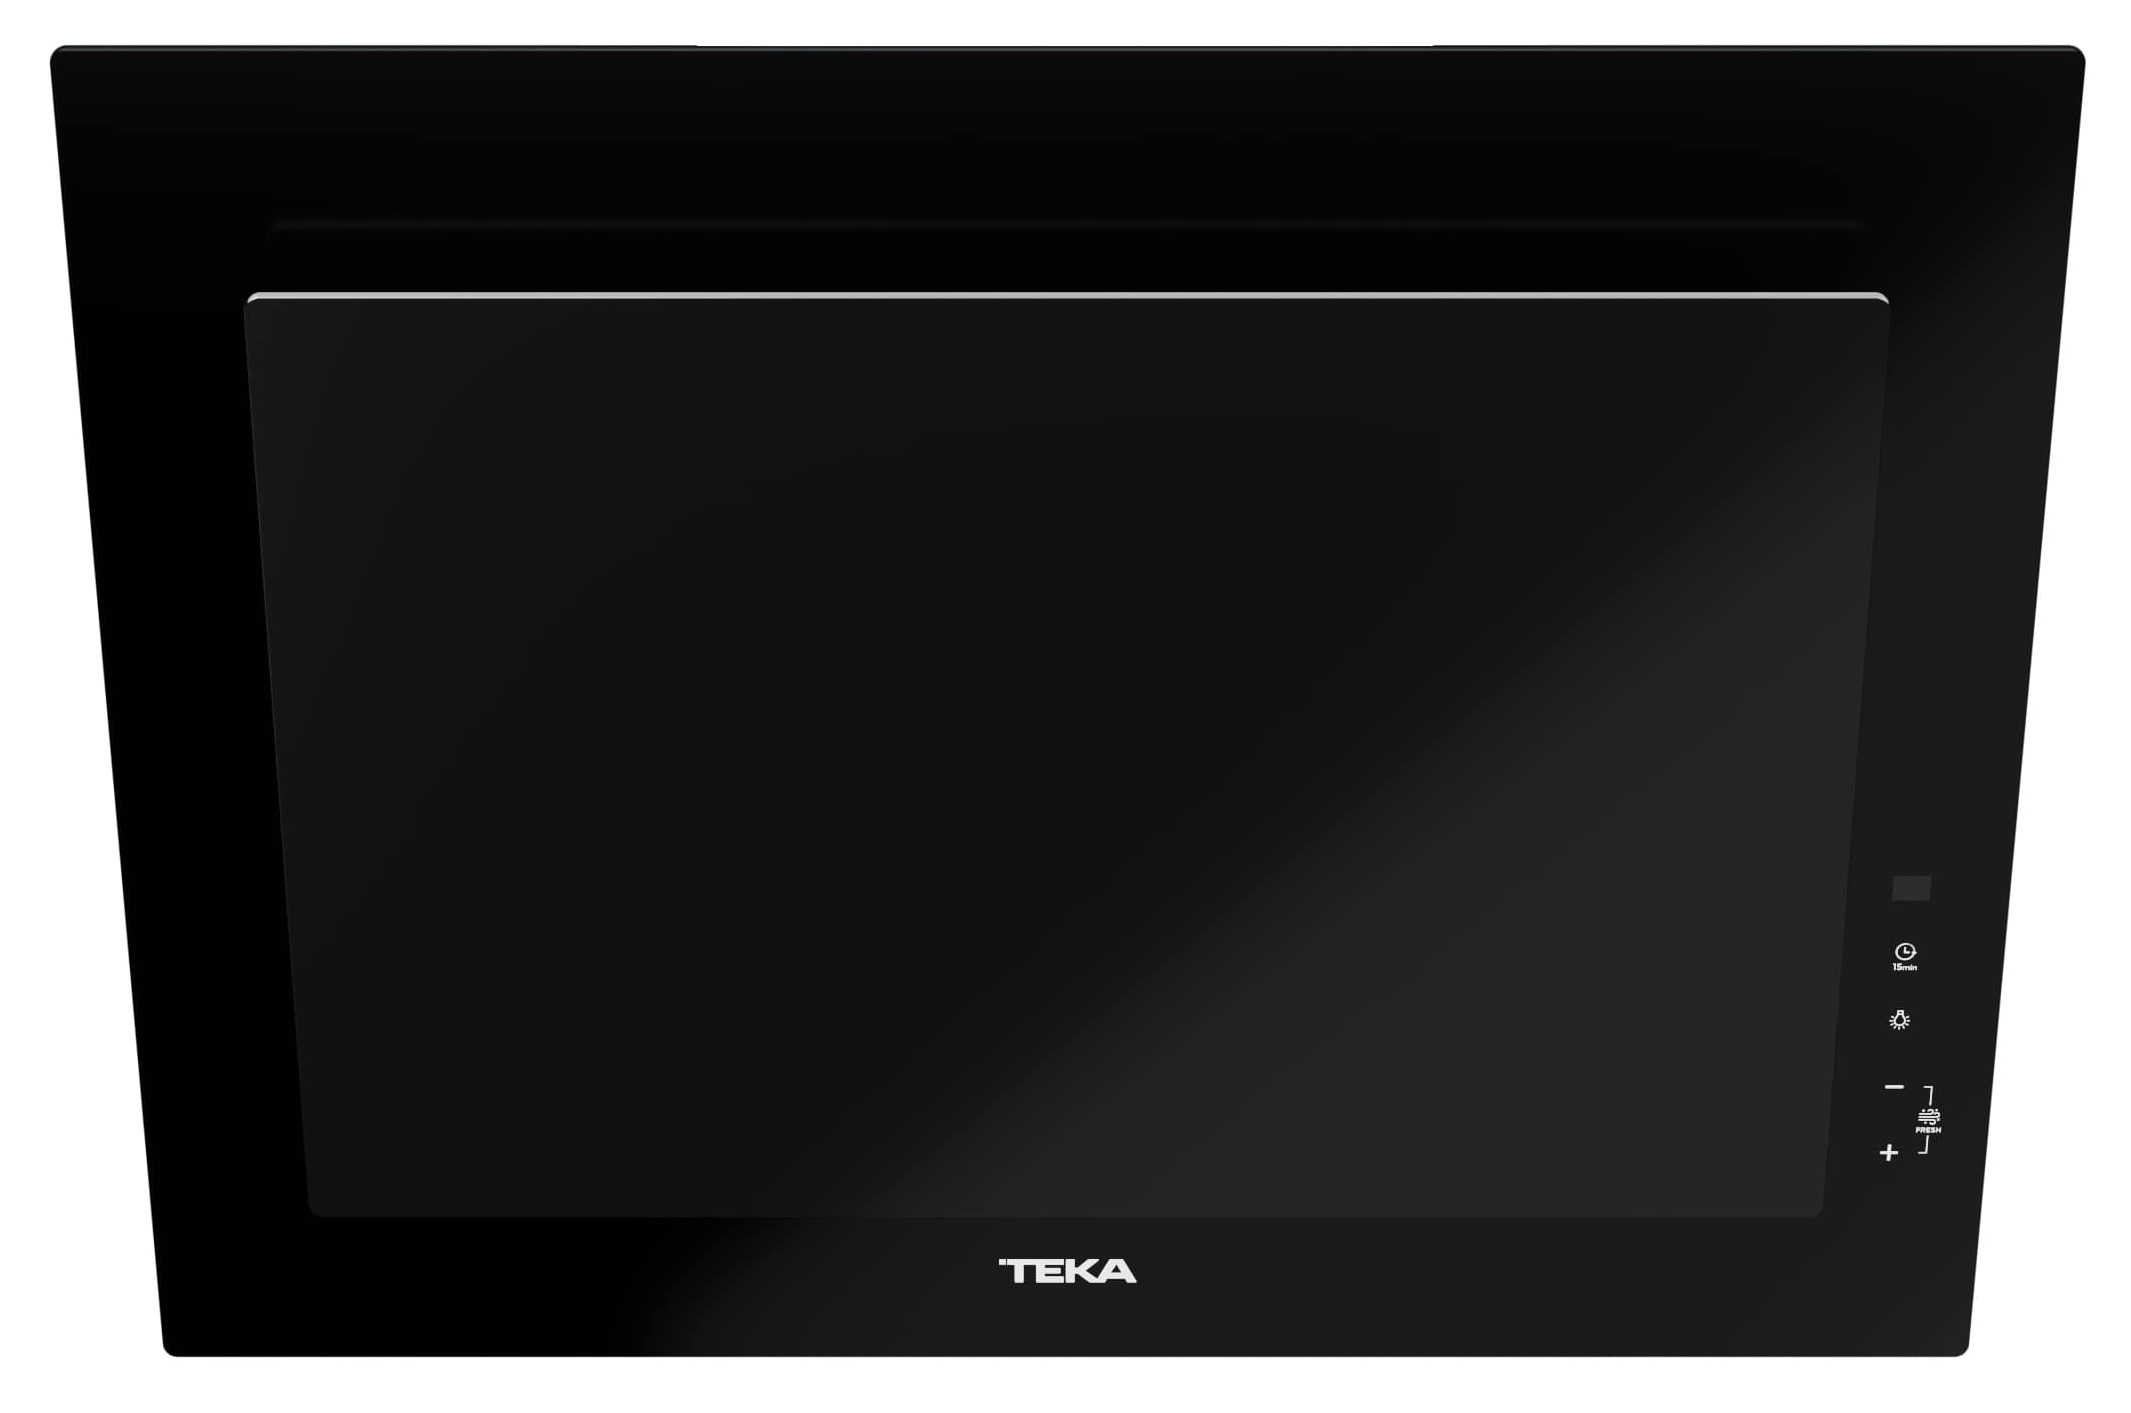 Кухонная вытяжка Teka DVT Pro 68660 TBS BK характеристики - фотография 7